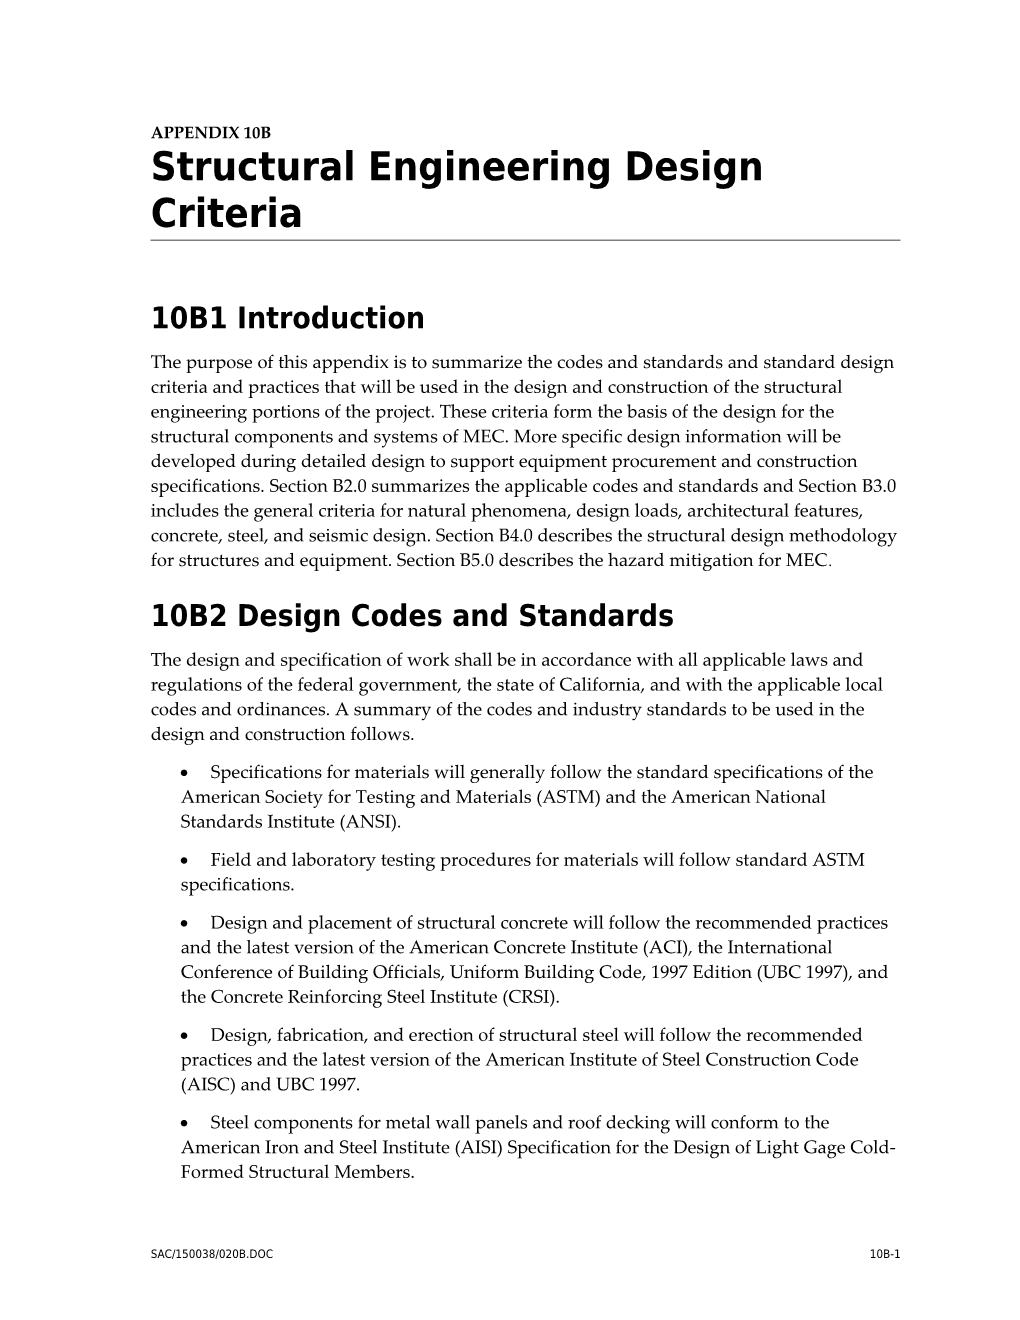 Structural Engineering Design Criteria